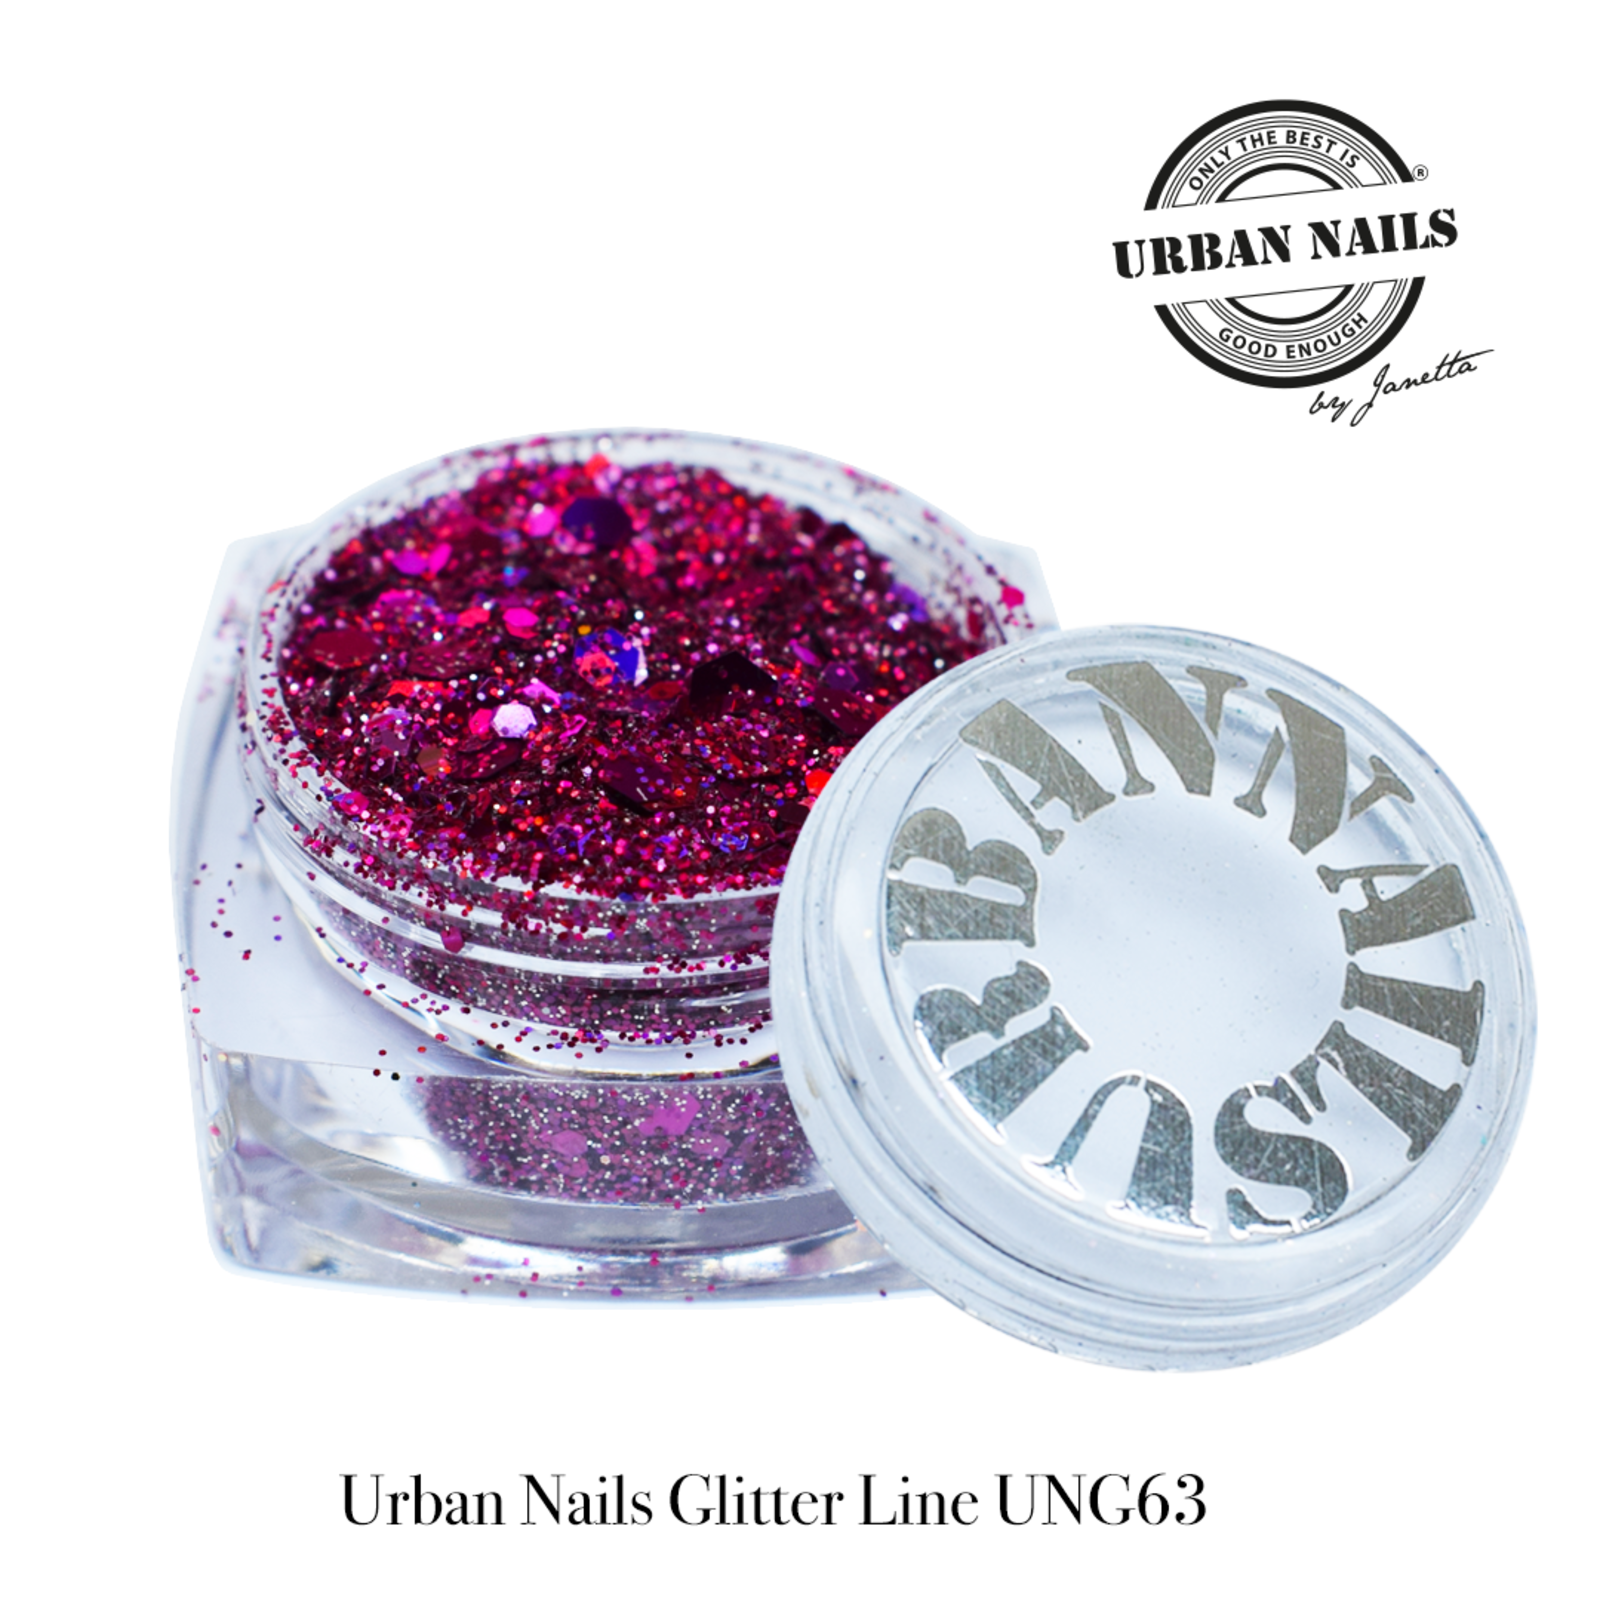 Urban nails Glitter Line UNG63